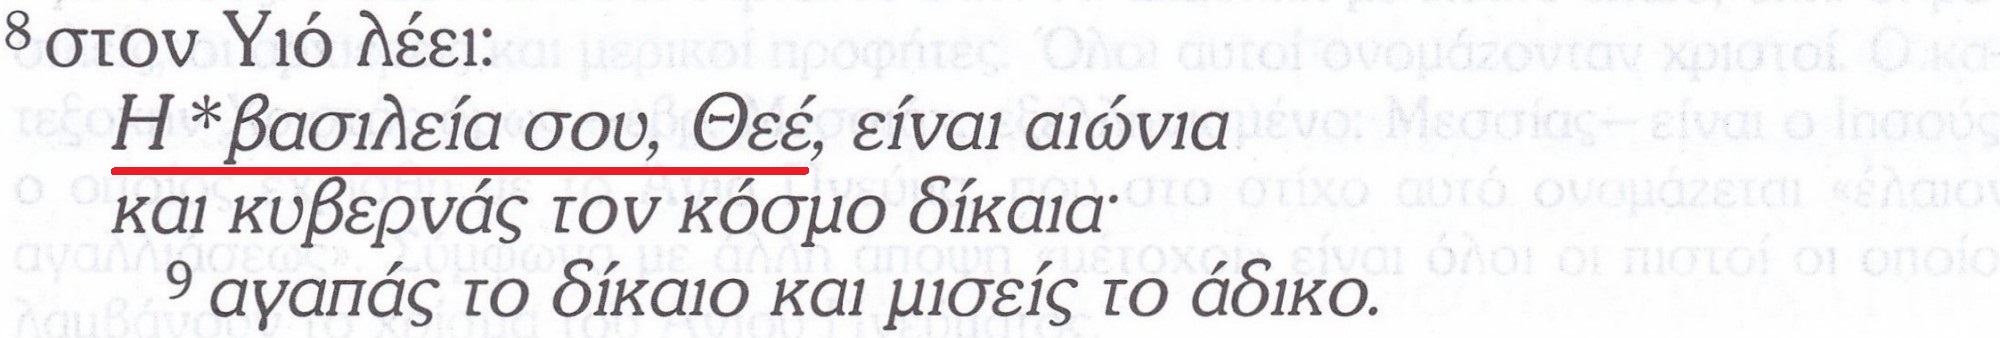 Nowy Testament Grecko-grecki